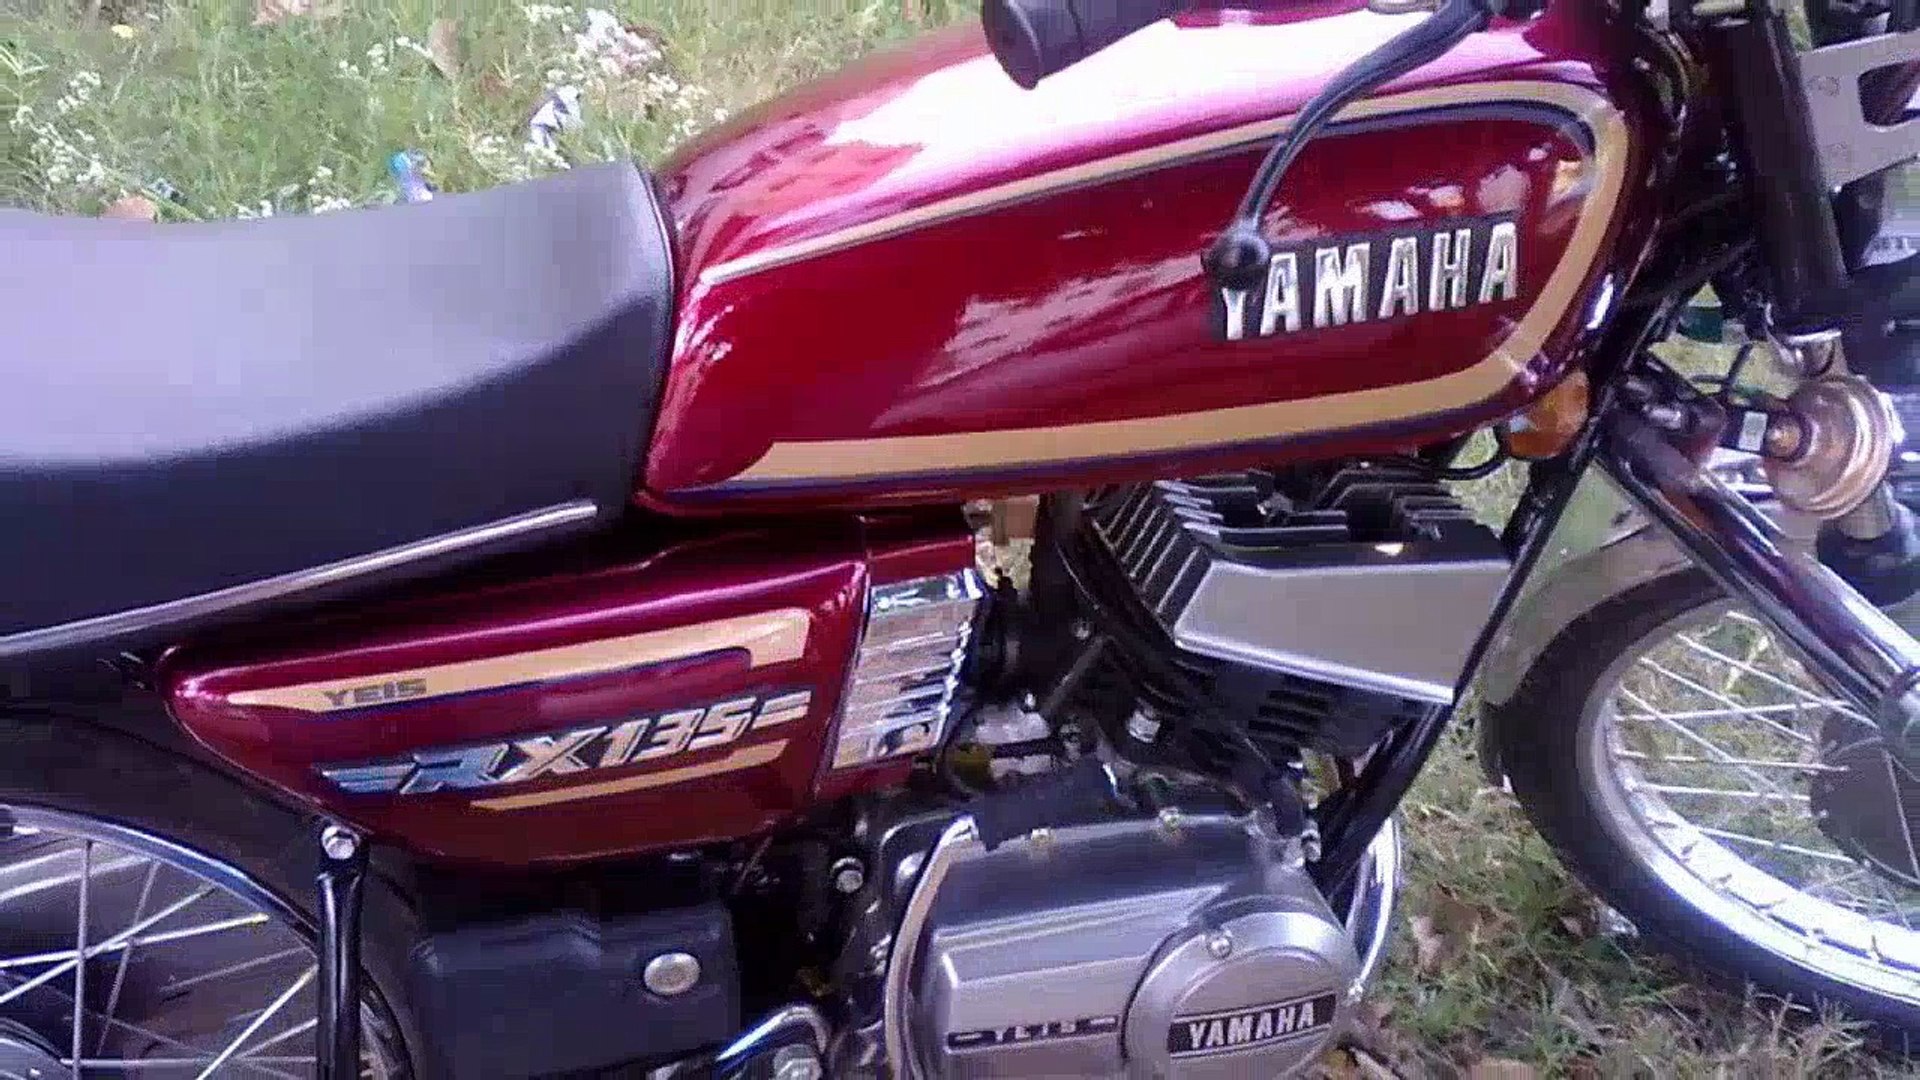 Yamaha rx135 - video Dailymotion